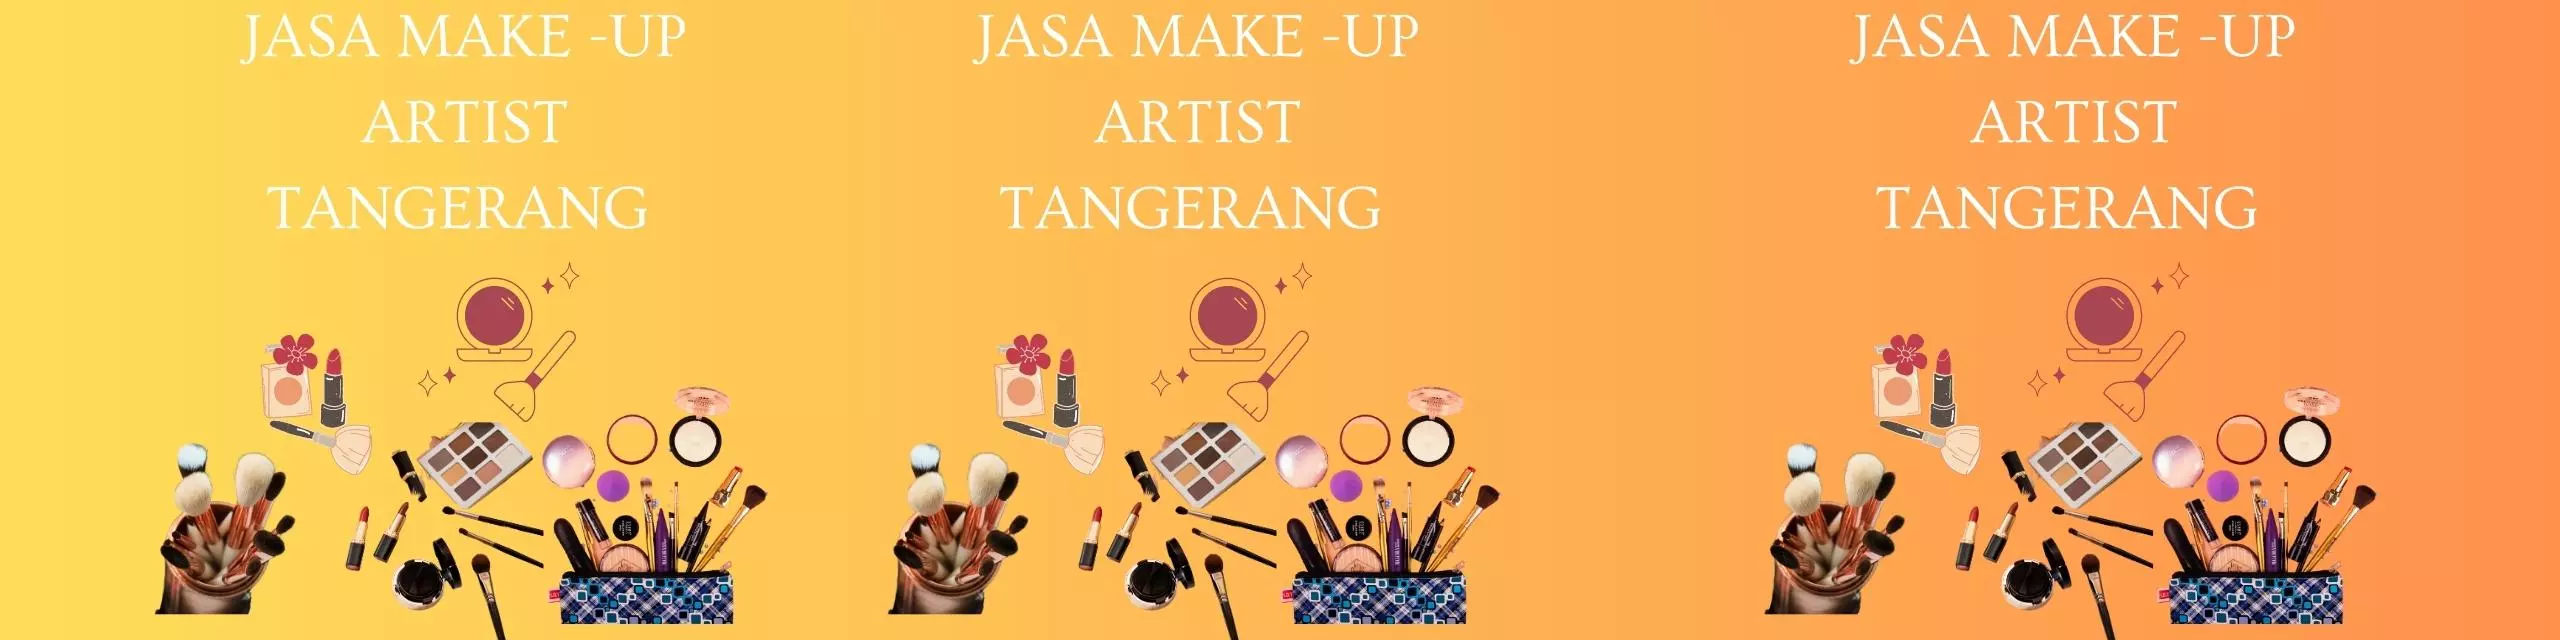 Jasa Make Up Artist Tangerang